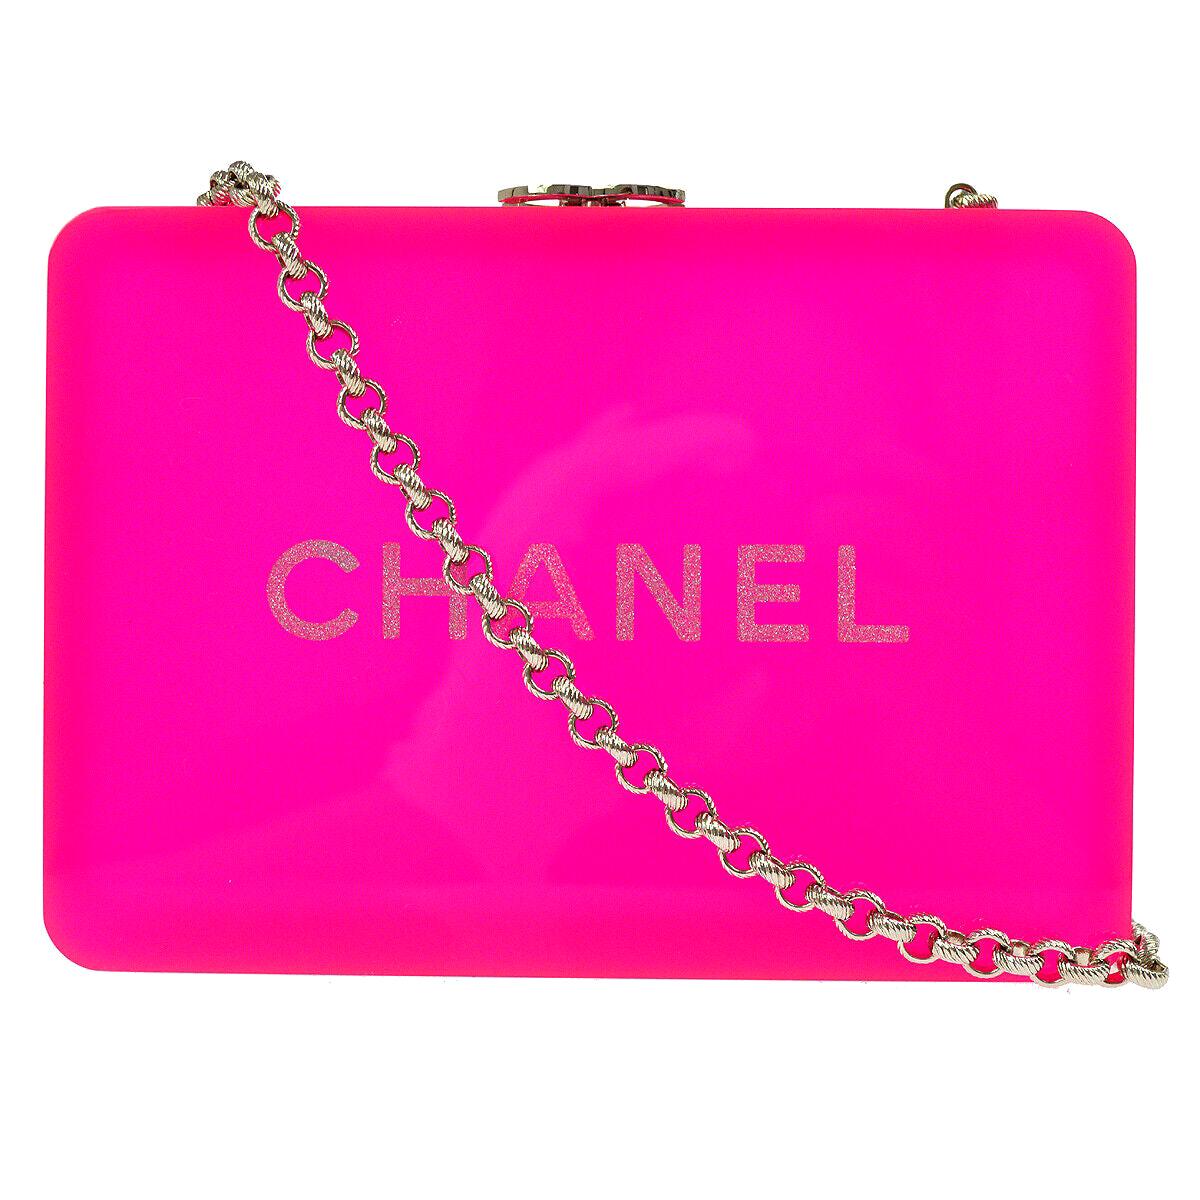 Chanel Neon Pink Plexi Glitter Crystal Evening Shoulder Flap Clutch Bag in Box